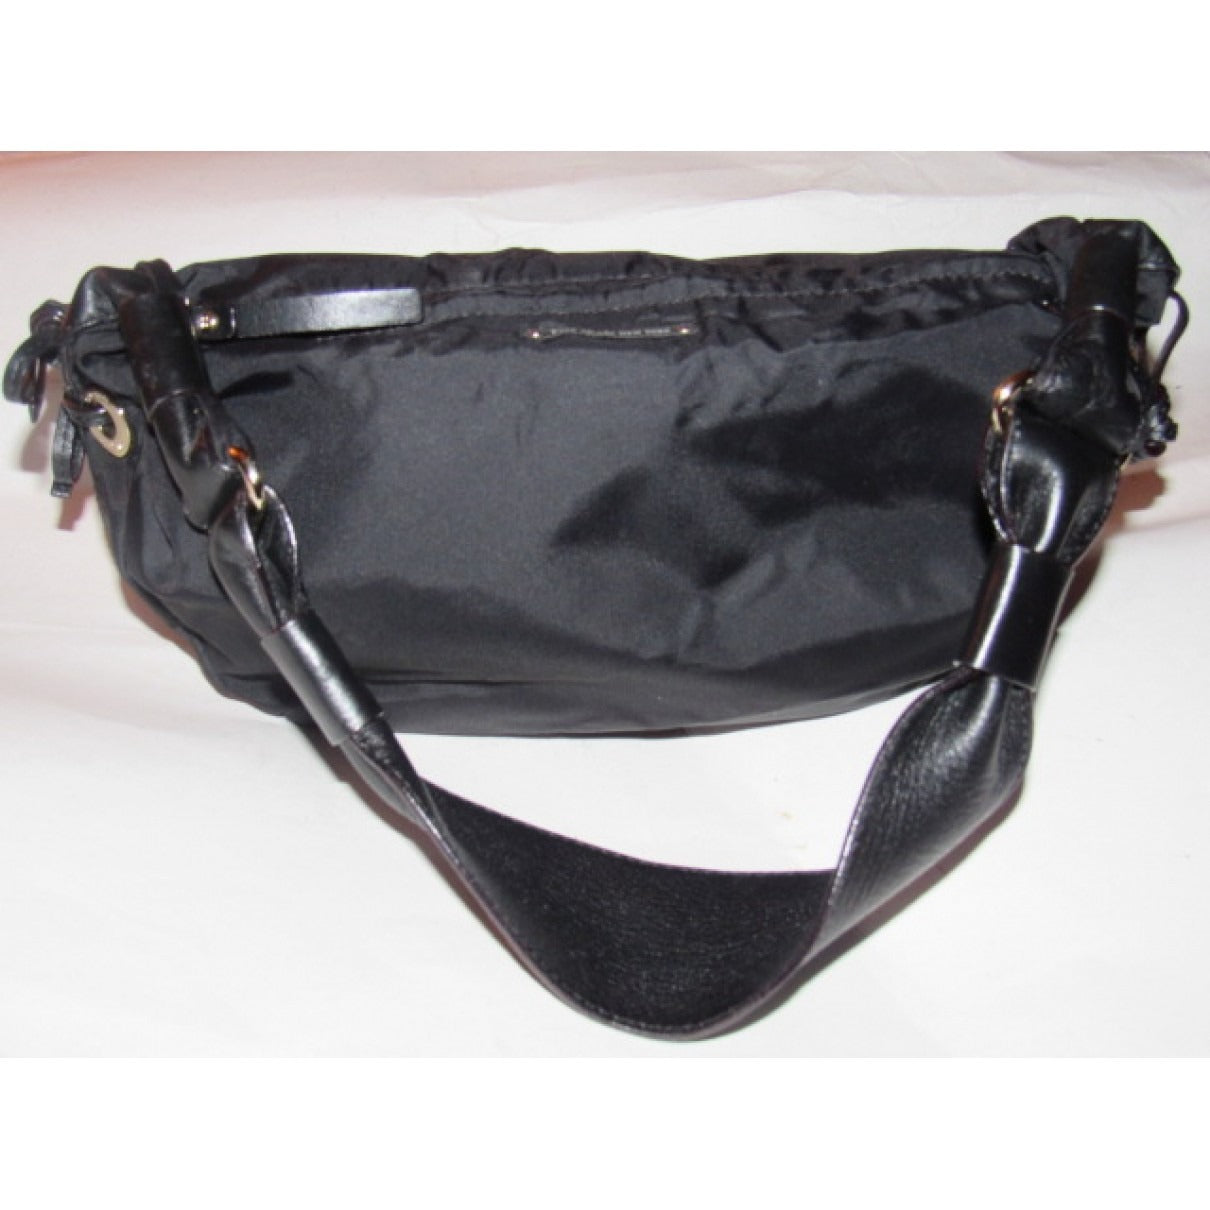 Kate Spade black leather hobo purse w chrome accents